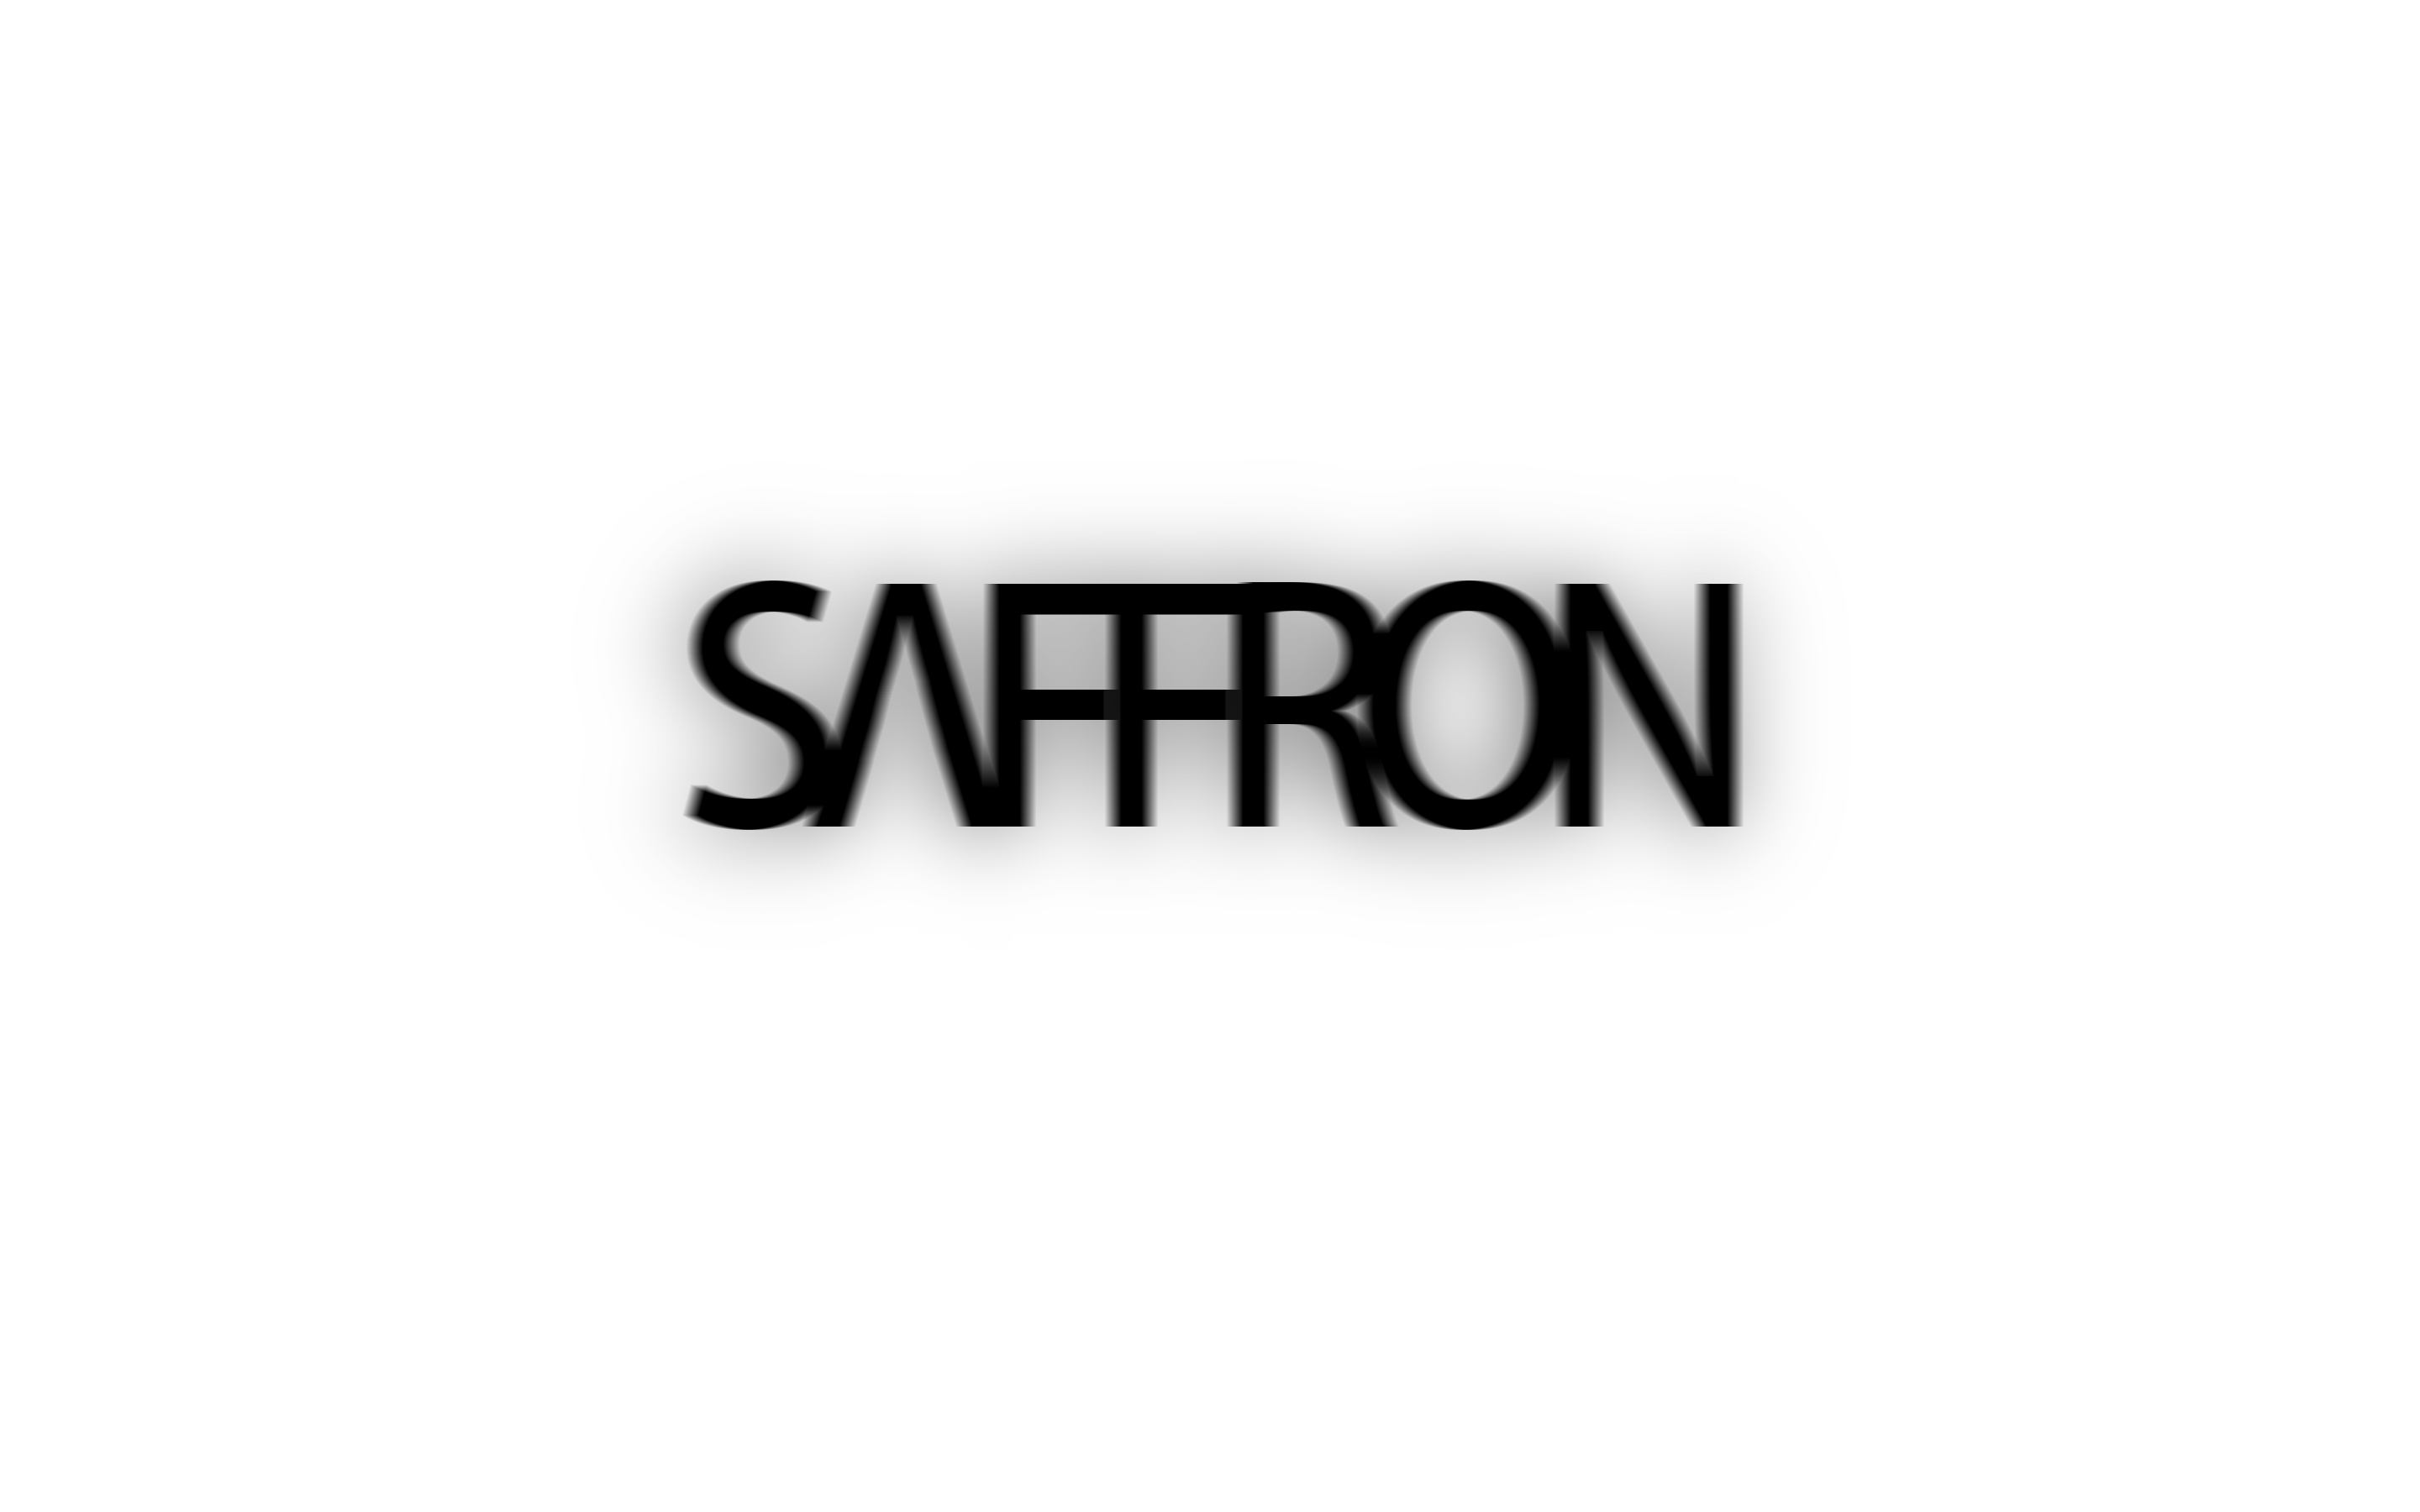 Music Saffron HD Wallpaper | Background Image